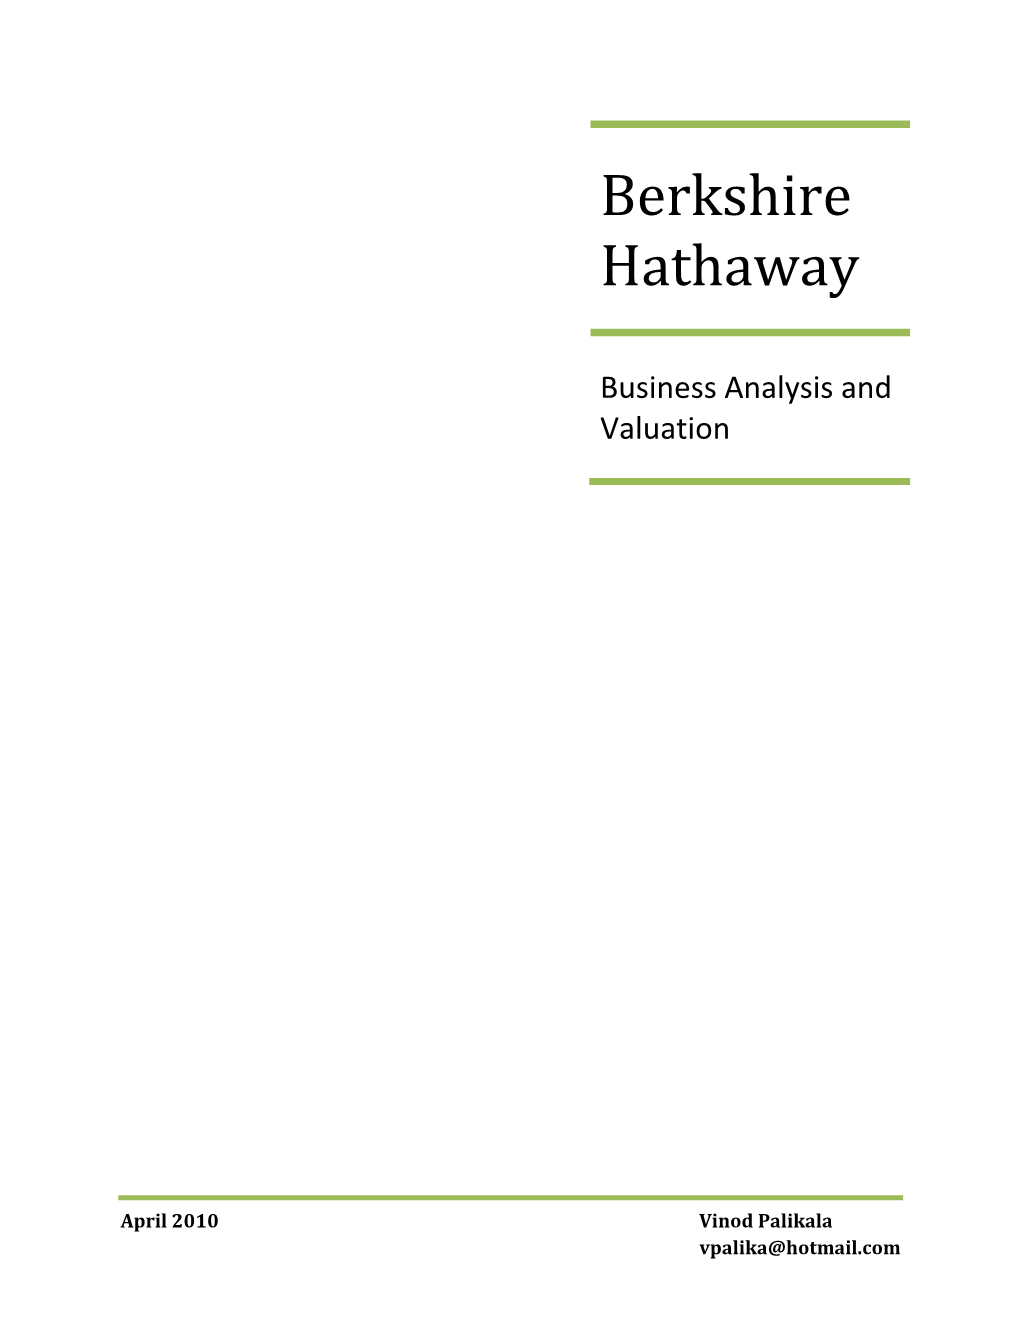 Berkshire Hathaway Valuation